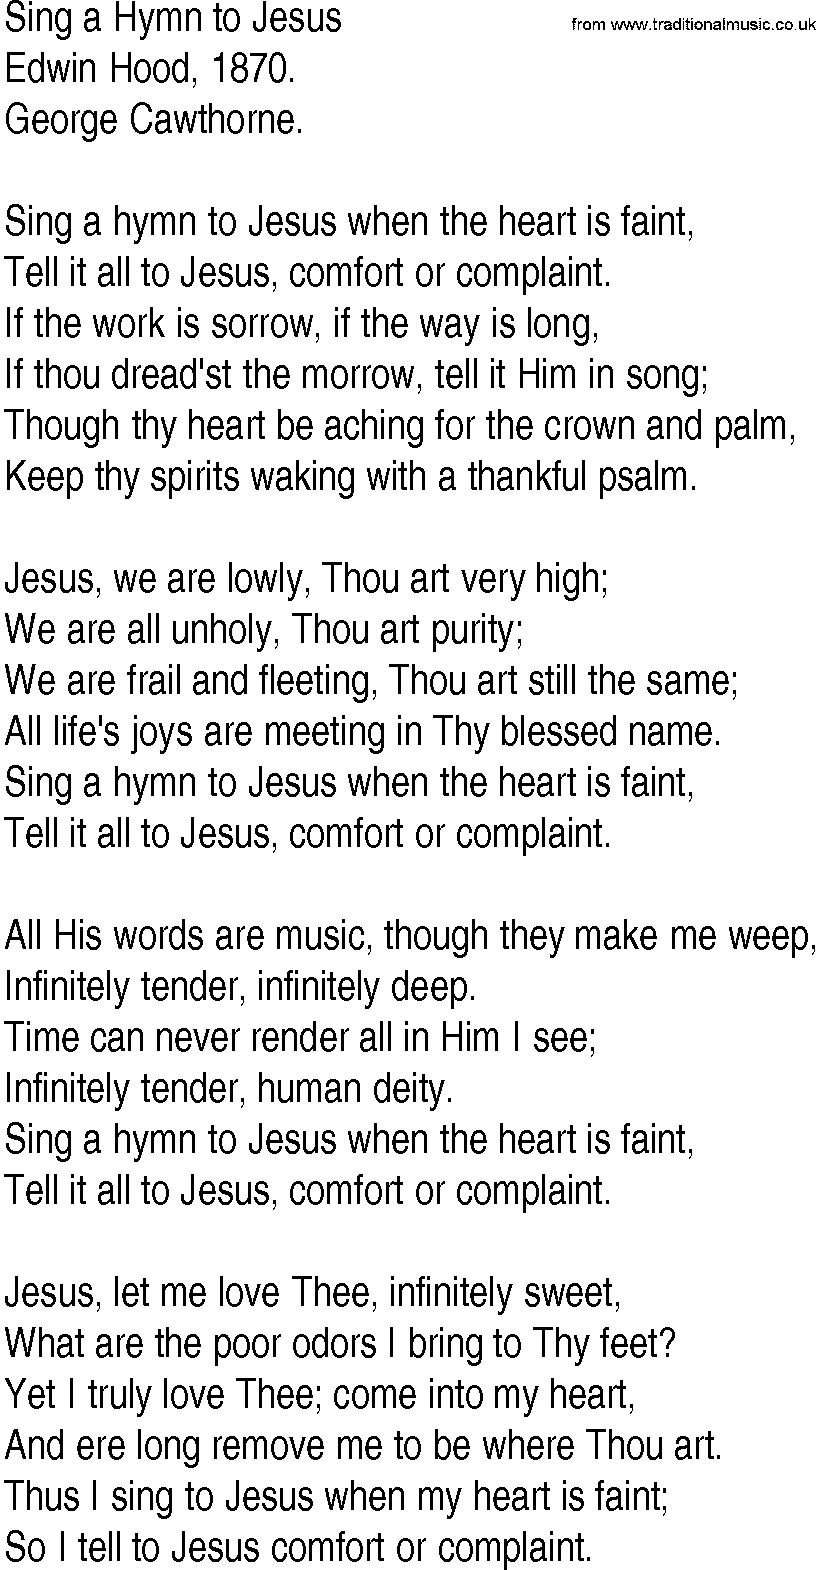 Hymn and Gospel Song: Sing a Hymn to Jesus by Edwin Hood lyrics